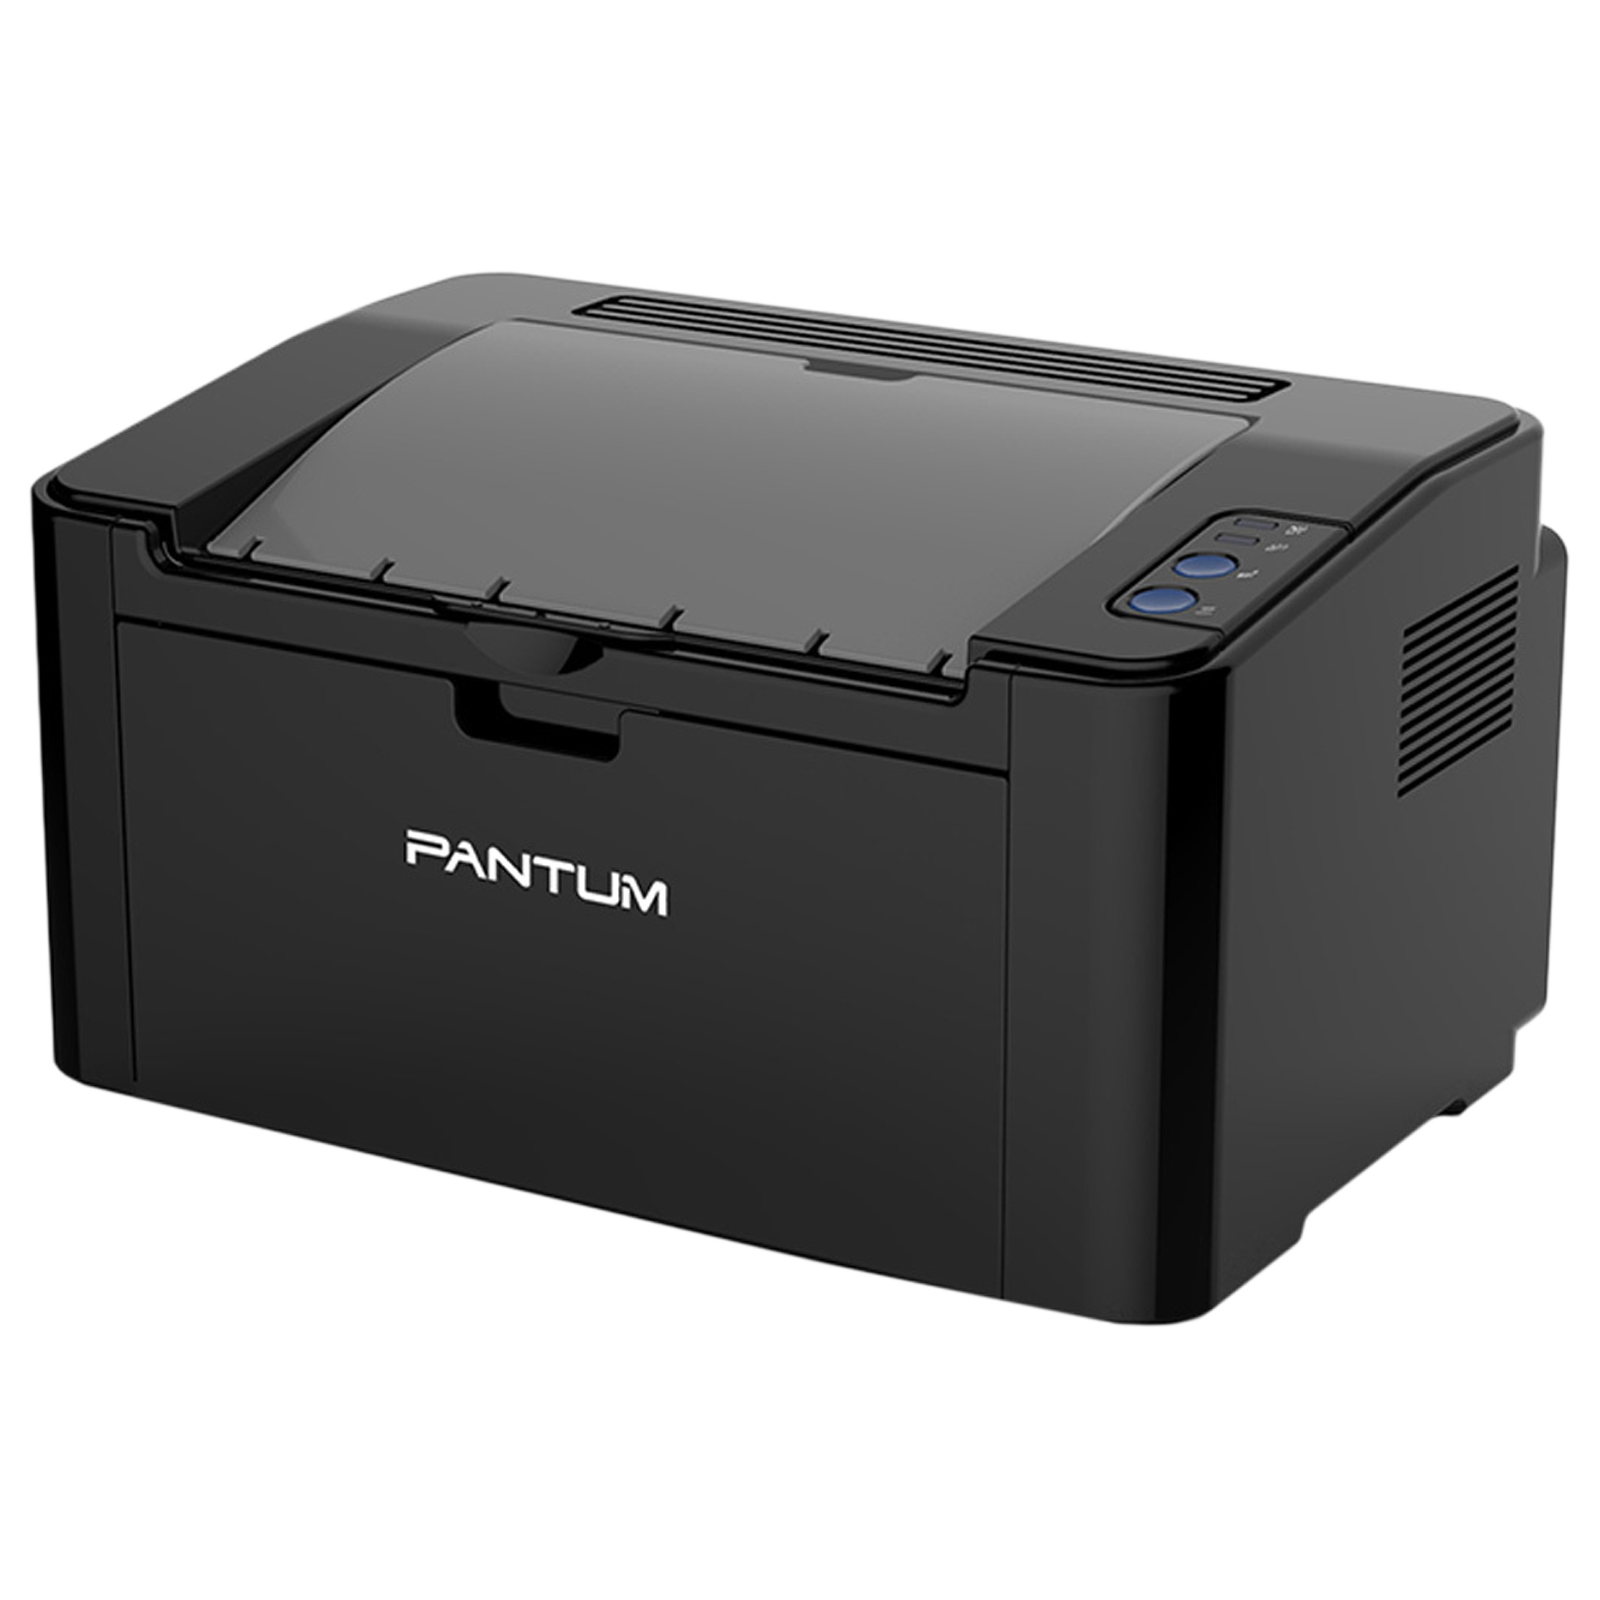 Buy Pantum Wireless Black & White All-in-One Laserjet Printer (Mobile .